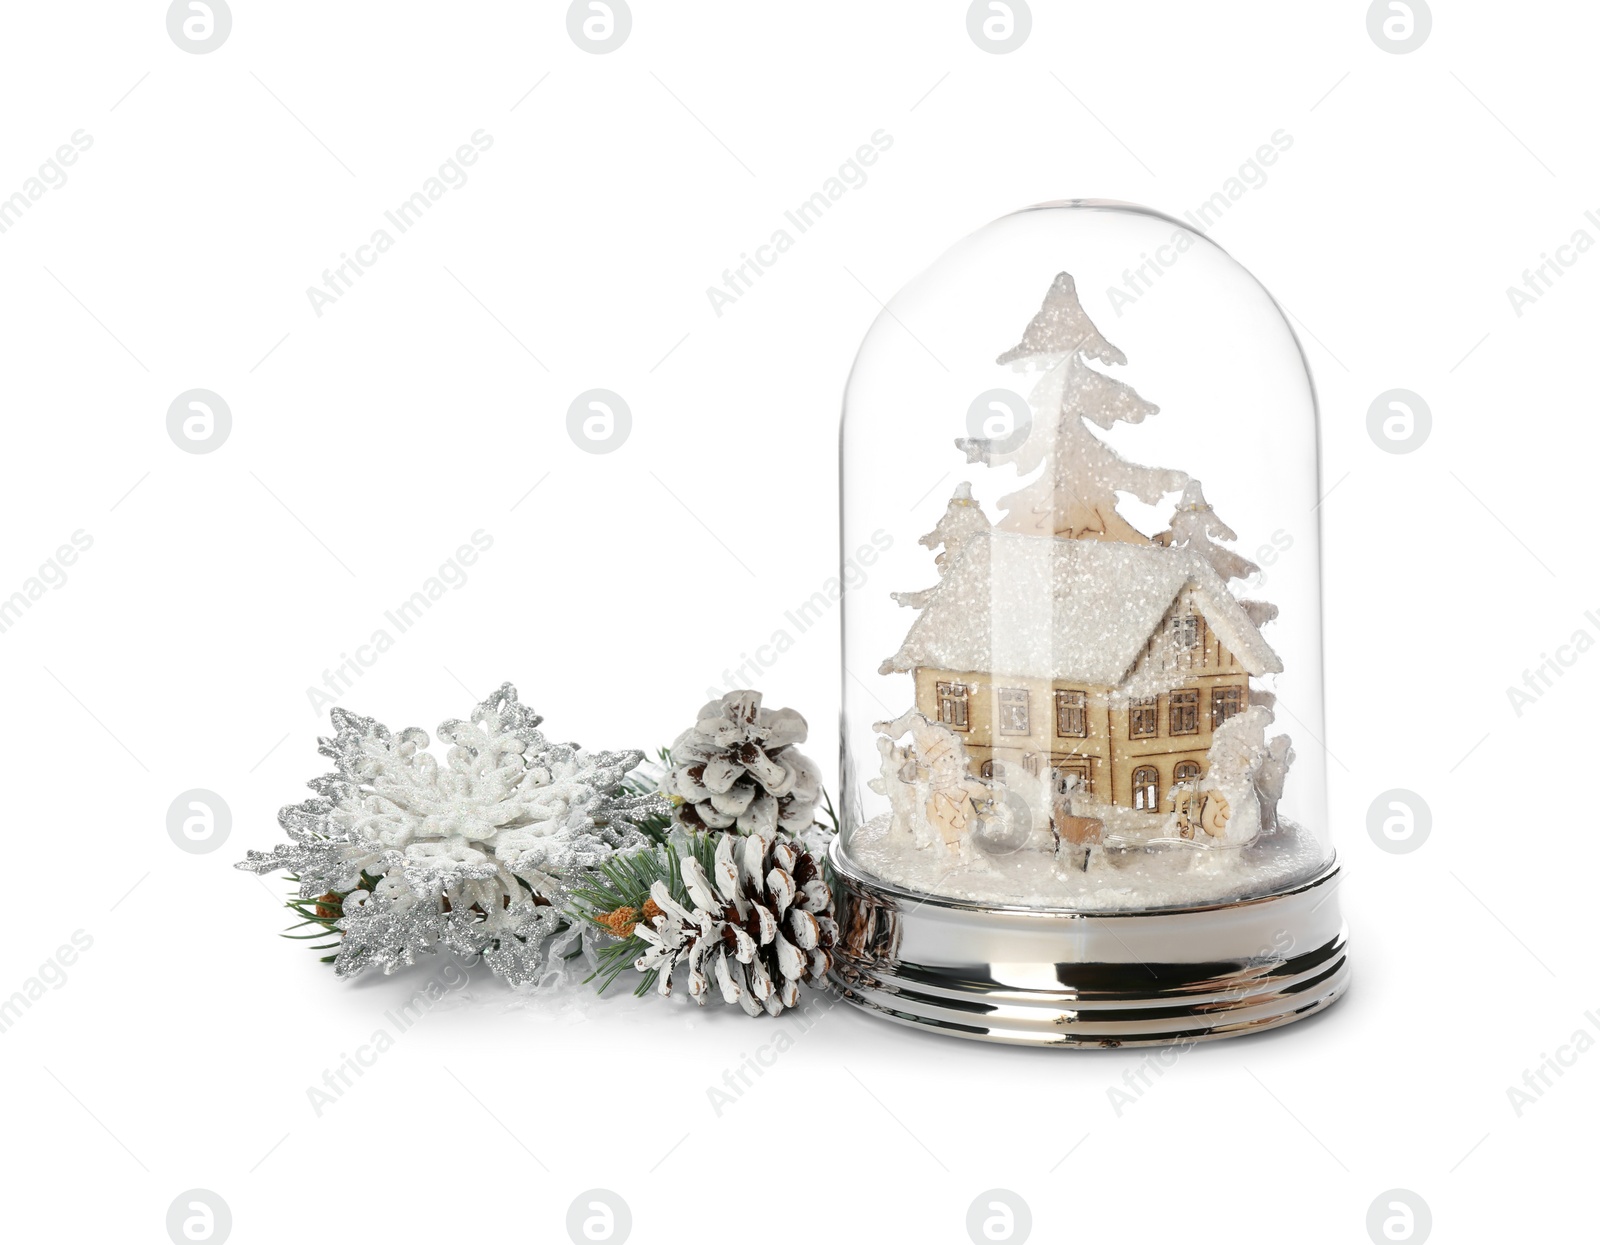 Photo of Beautiful snow globe and Christmas decor on white background